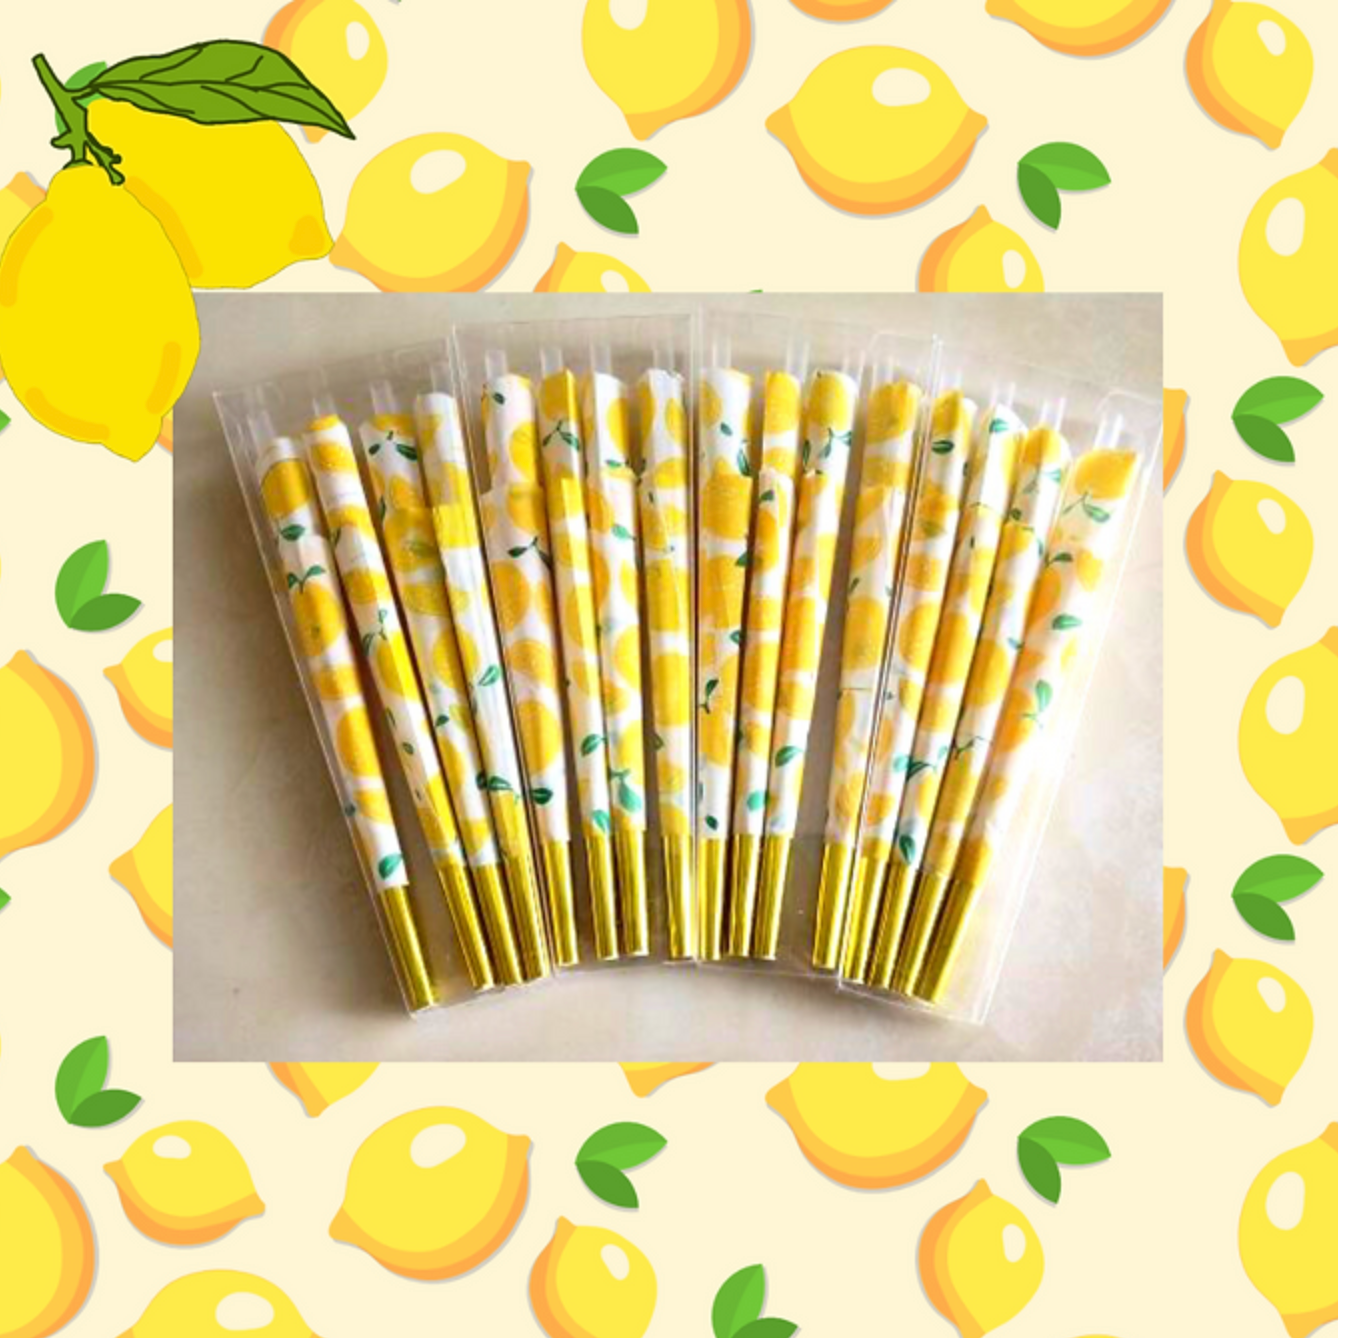 Lemon flavored cones